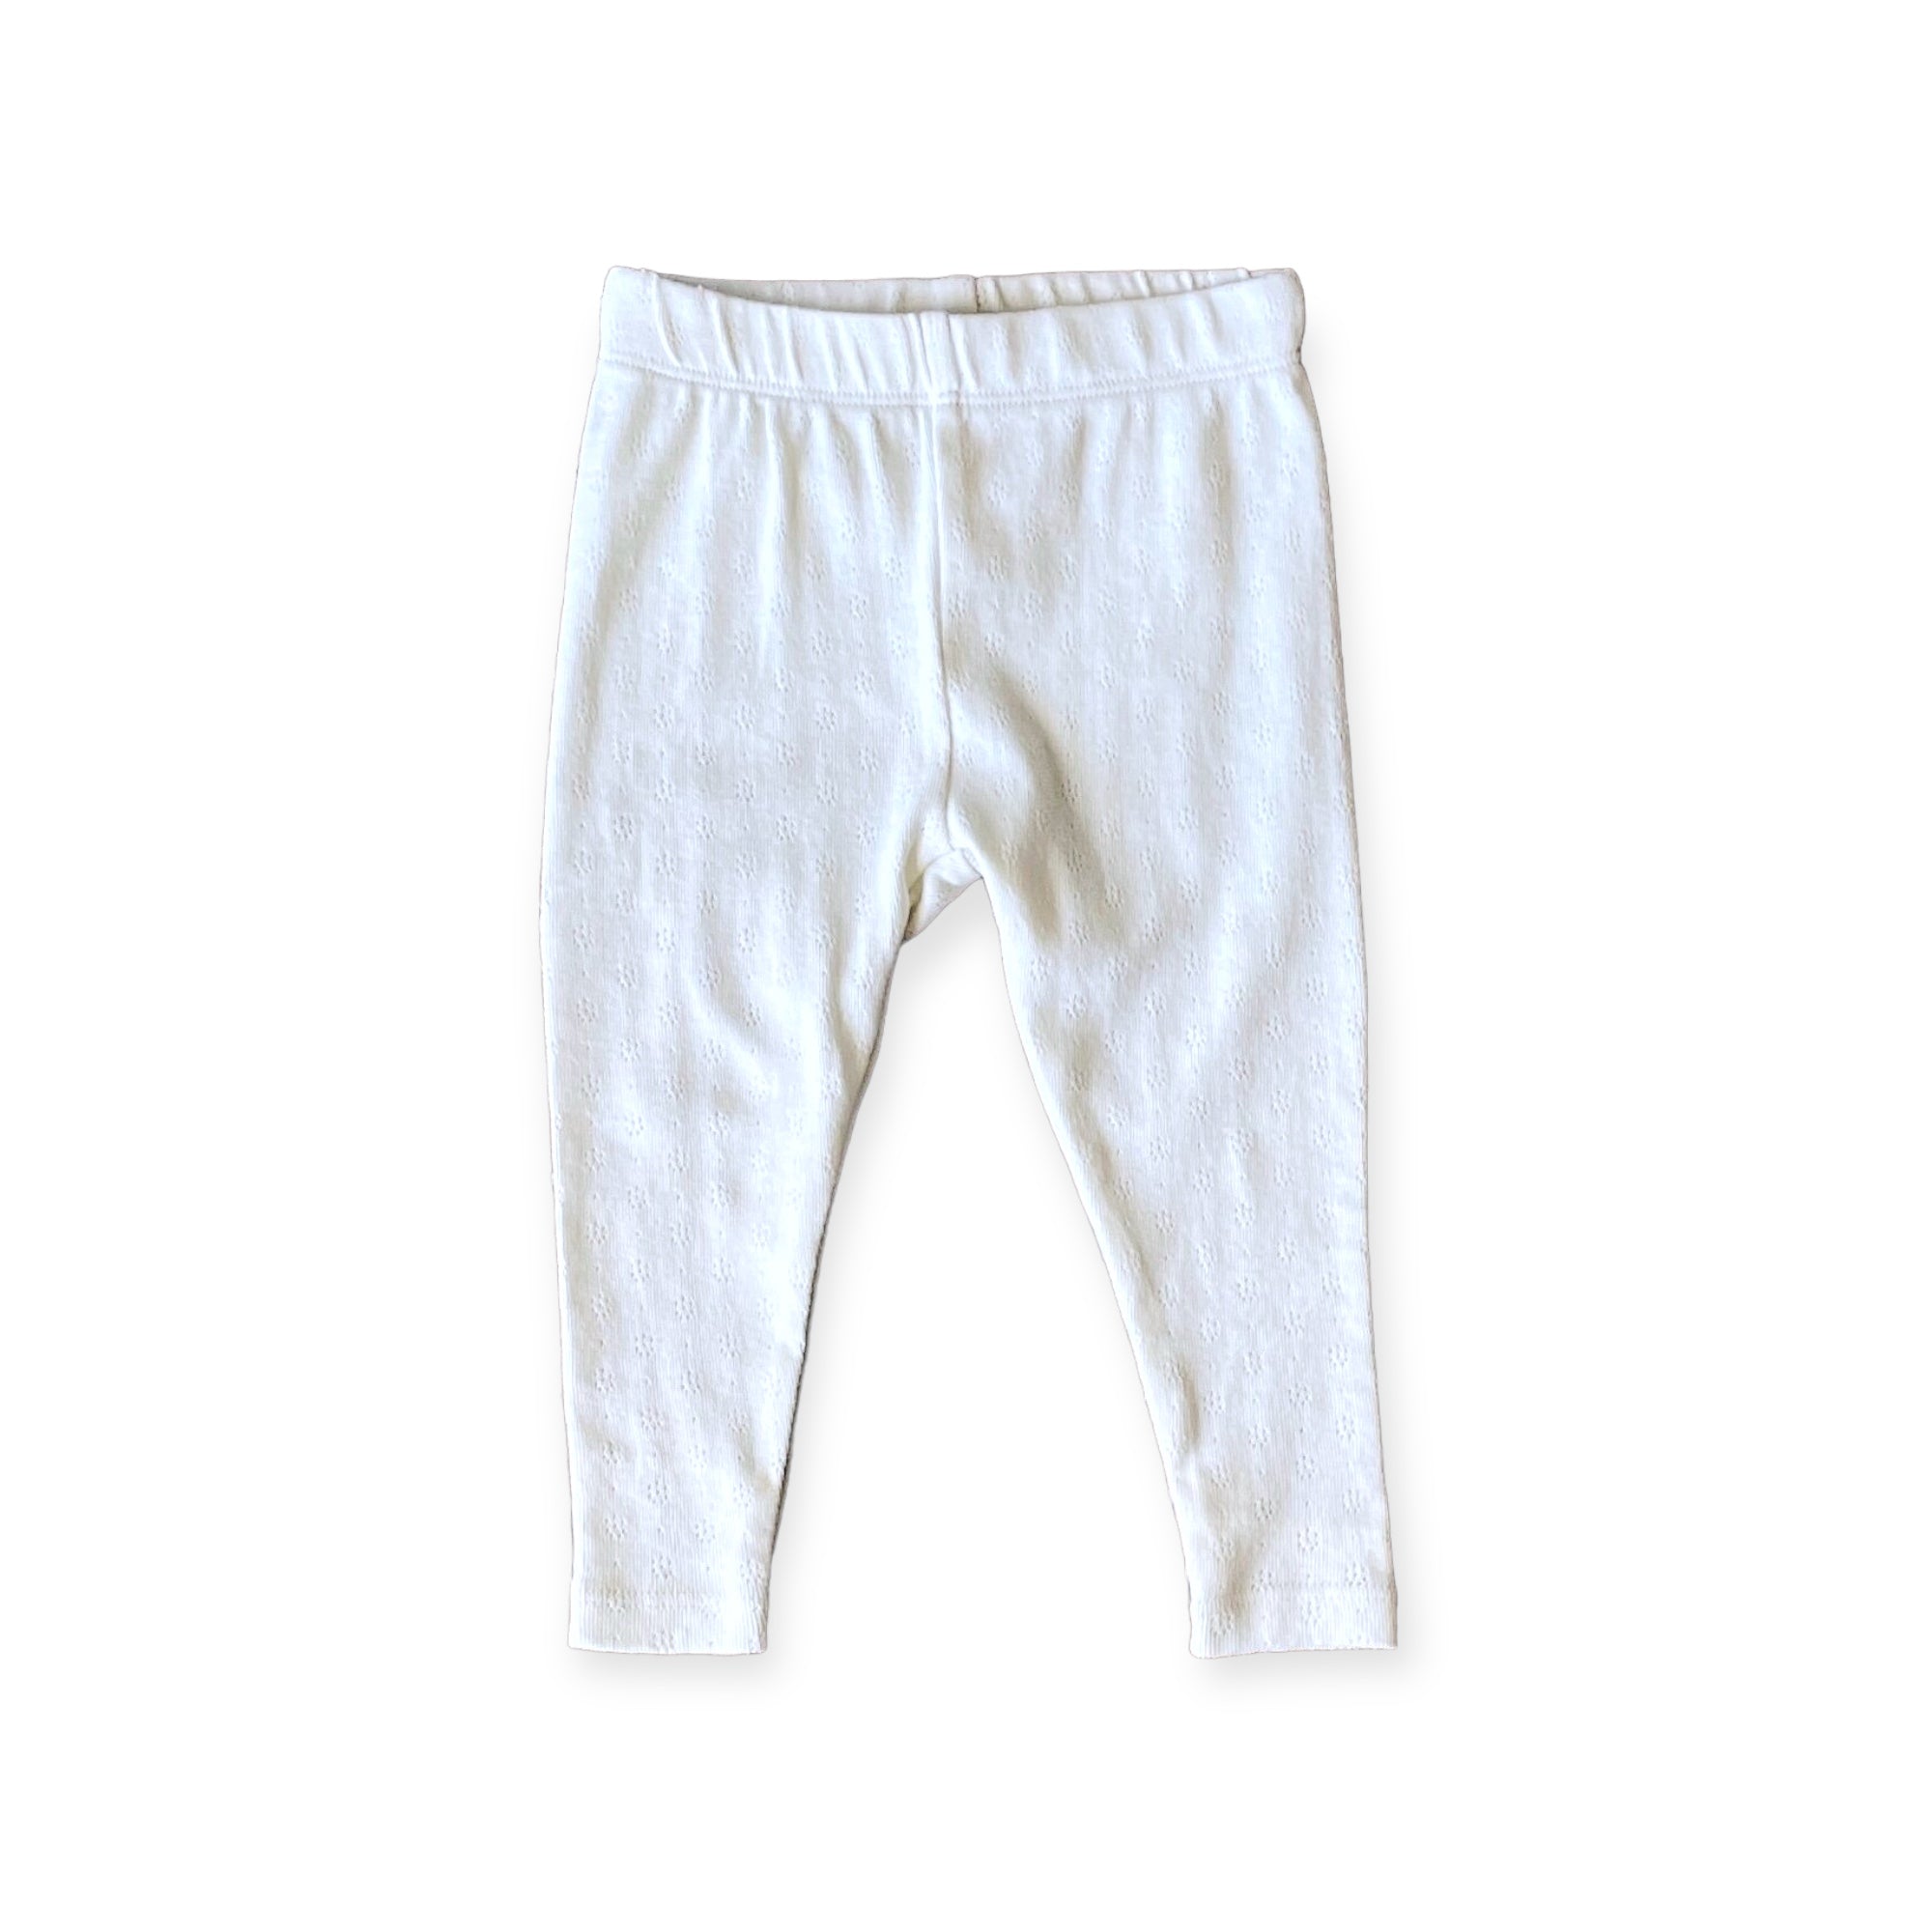 Pointelle Stretch Knit Baby Leggings Pants (Organic Cotton) - 7 Colors